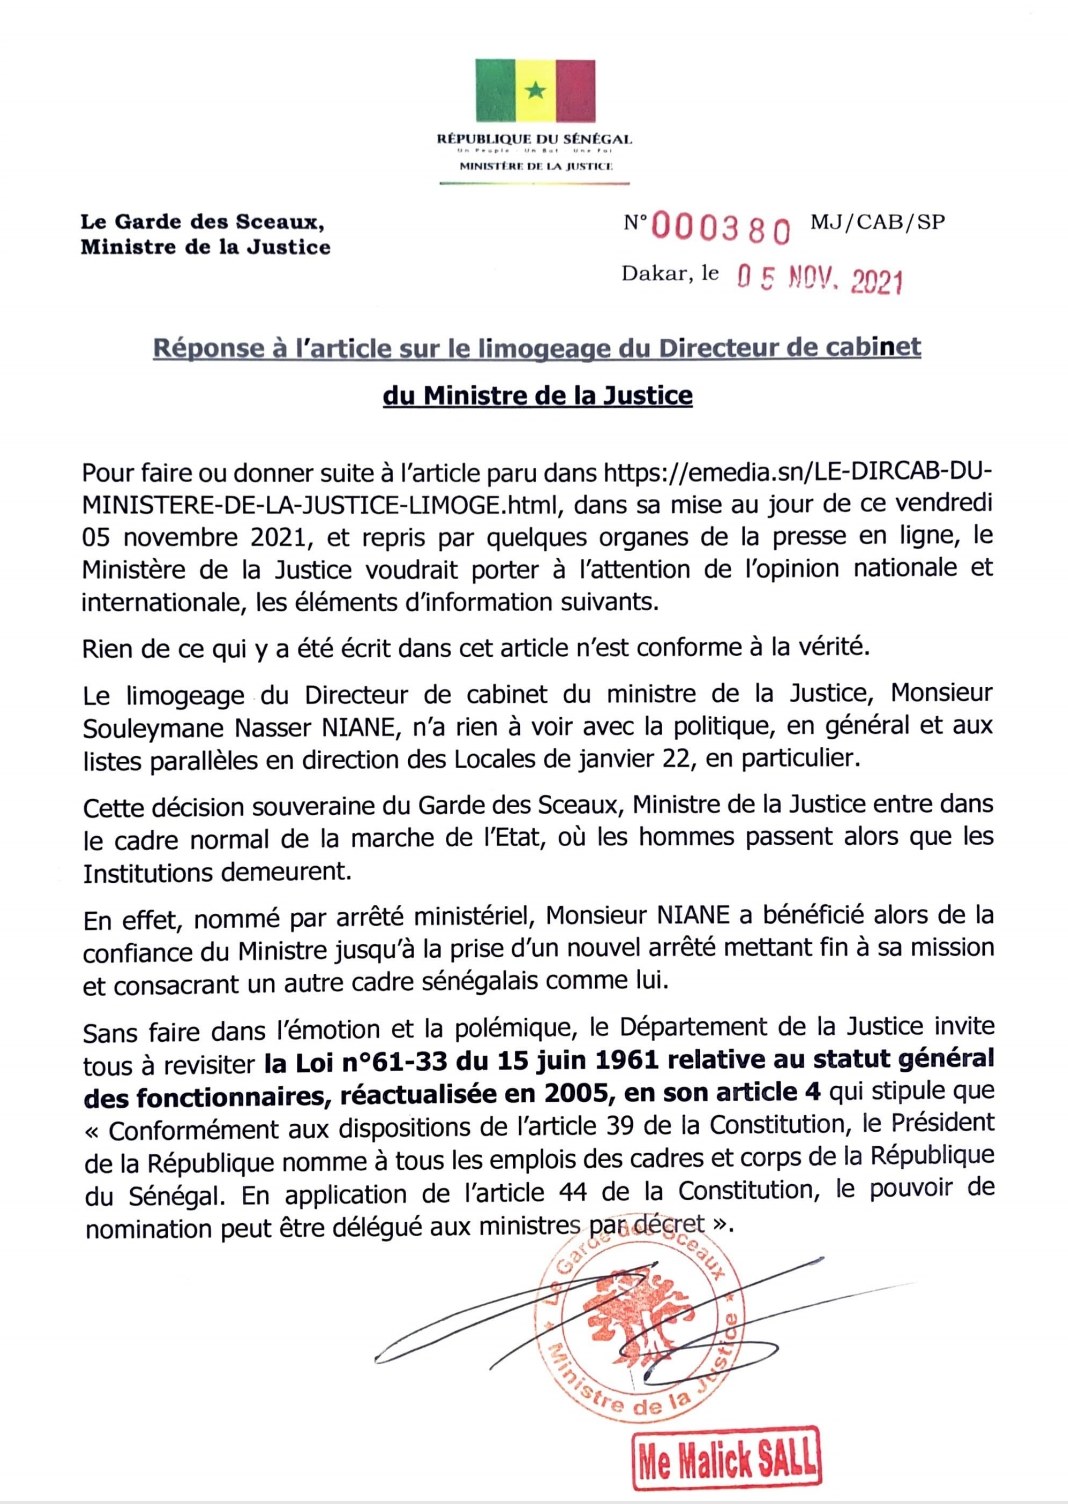 Malick Sall confirme le limogeage de son Directeur de Cabinet Souleymane Nasser Niane